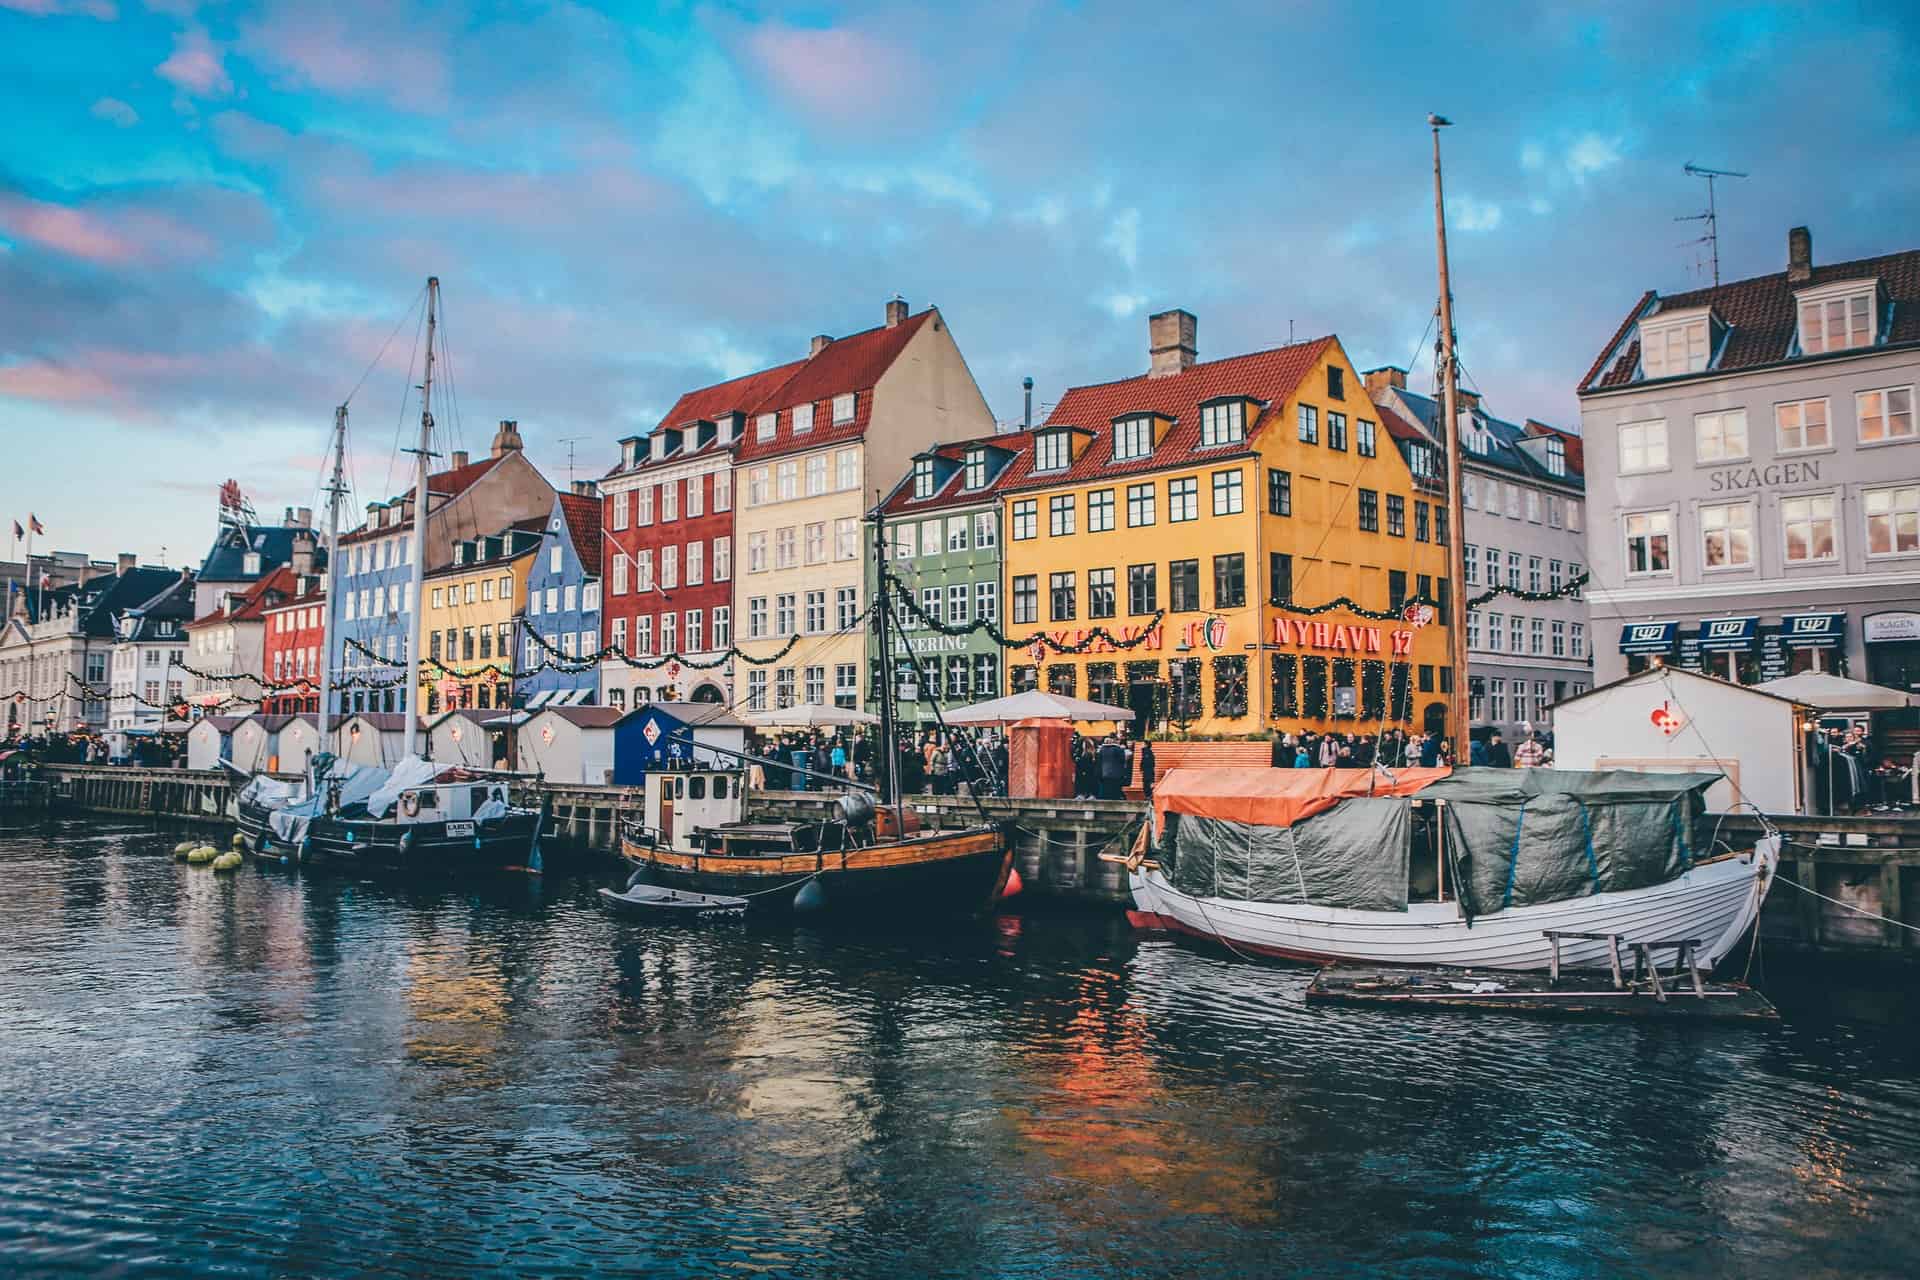 Best things to do in Copenhagen Denmark - Sally Bunnell - buildings on the water by Nick Karvounis on Unsplash